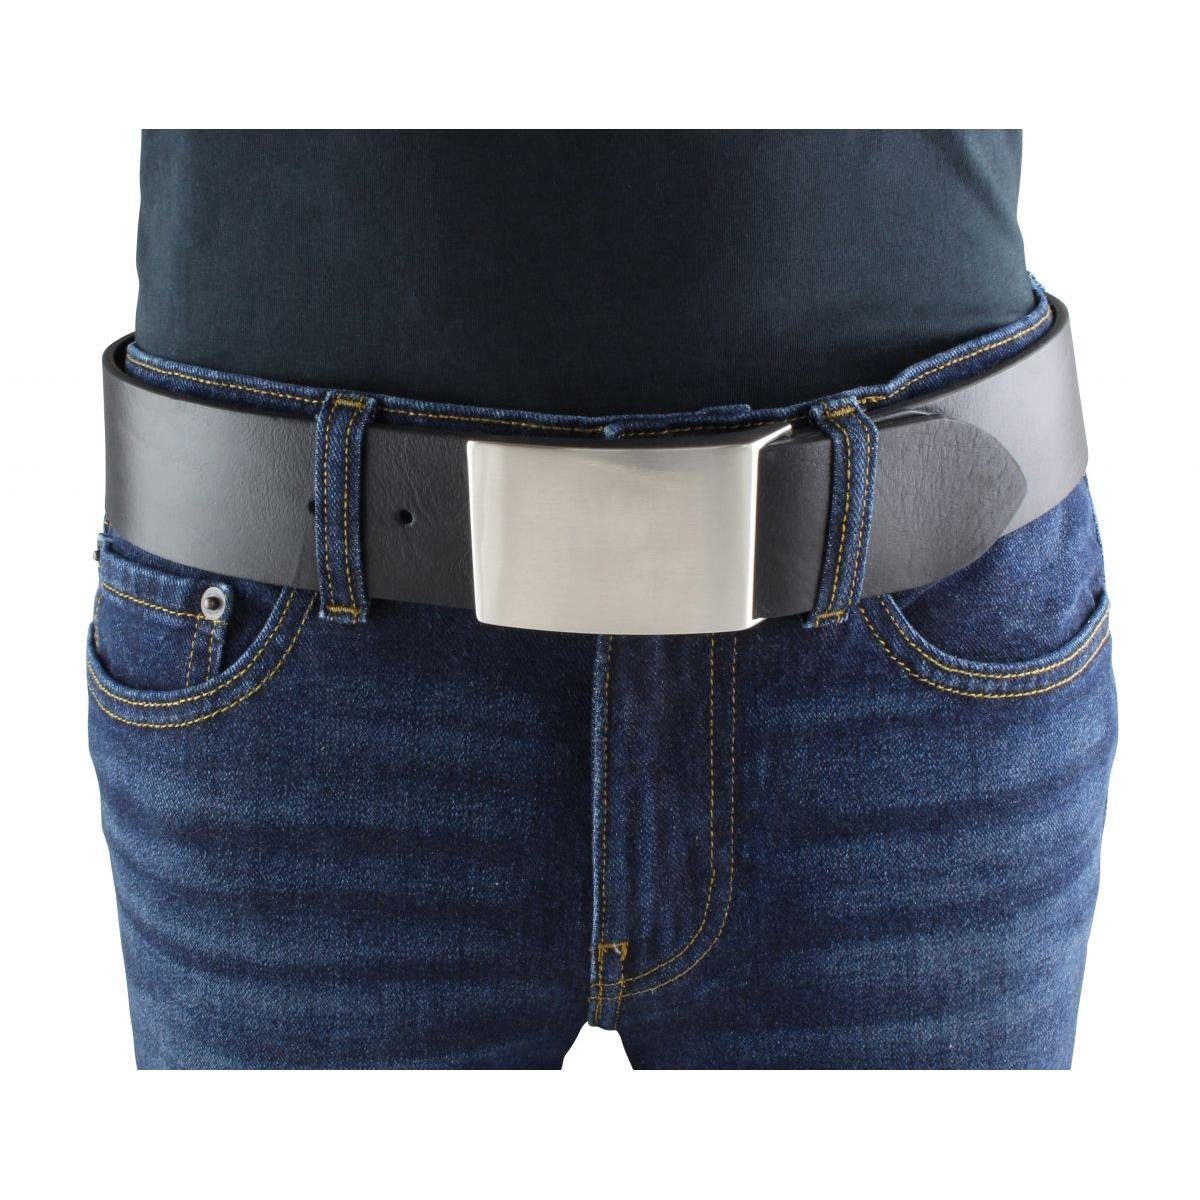 - Jeans-Gürtel Jeans aus Herren Silber 50mm Ledergürtel Gürtel BELTINGER - Schwarz, 5,0 cm für Vollrindleder